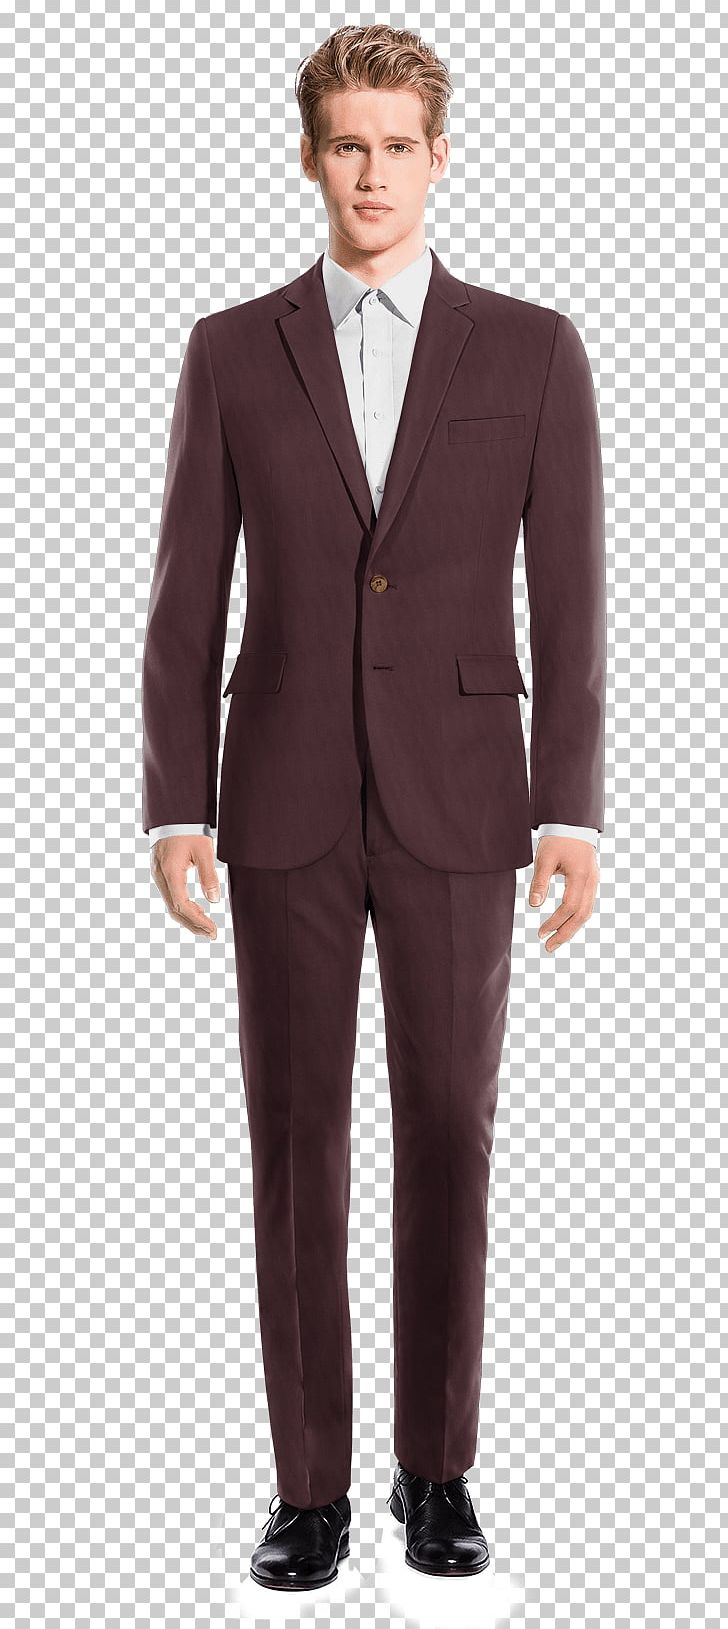 Suit Paisley Tuxedo Pants Necktie PNG, Clipart, Black Tie, Blazer, Businessperson, Clothing, Corduroy Free PNG Download